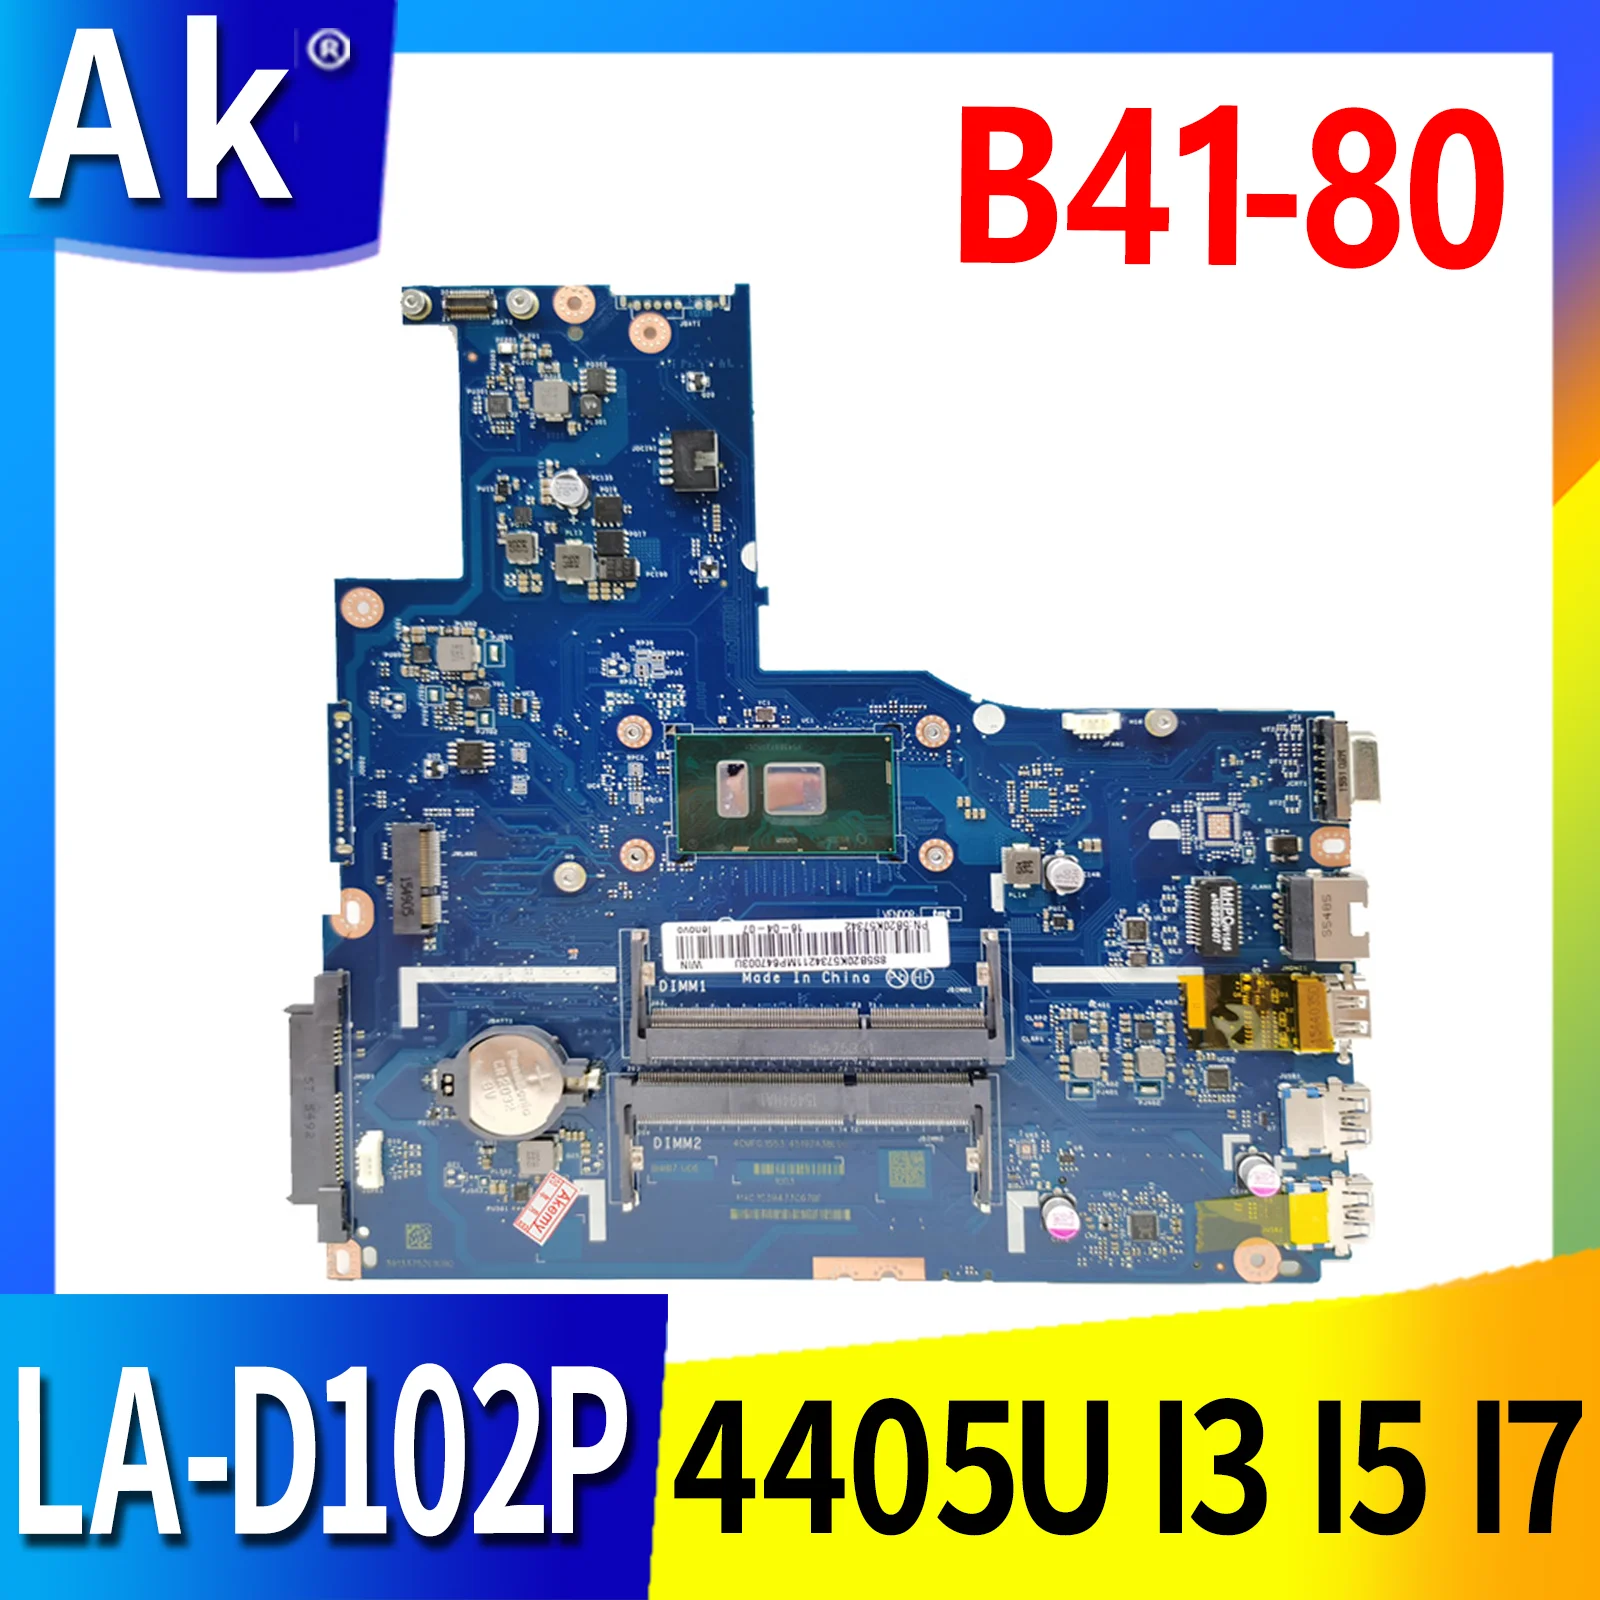 

LA-D102P Motherboard For Lenovo B51-80 E51-80 Laptop Motherboard Mainboard With 4405U I3 I5 I7 6th Gen CPU